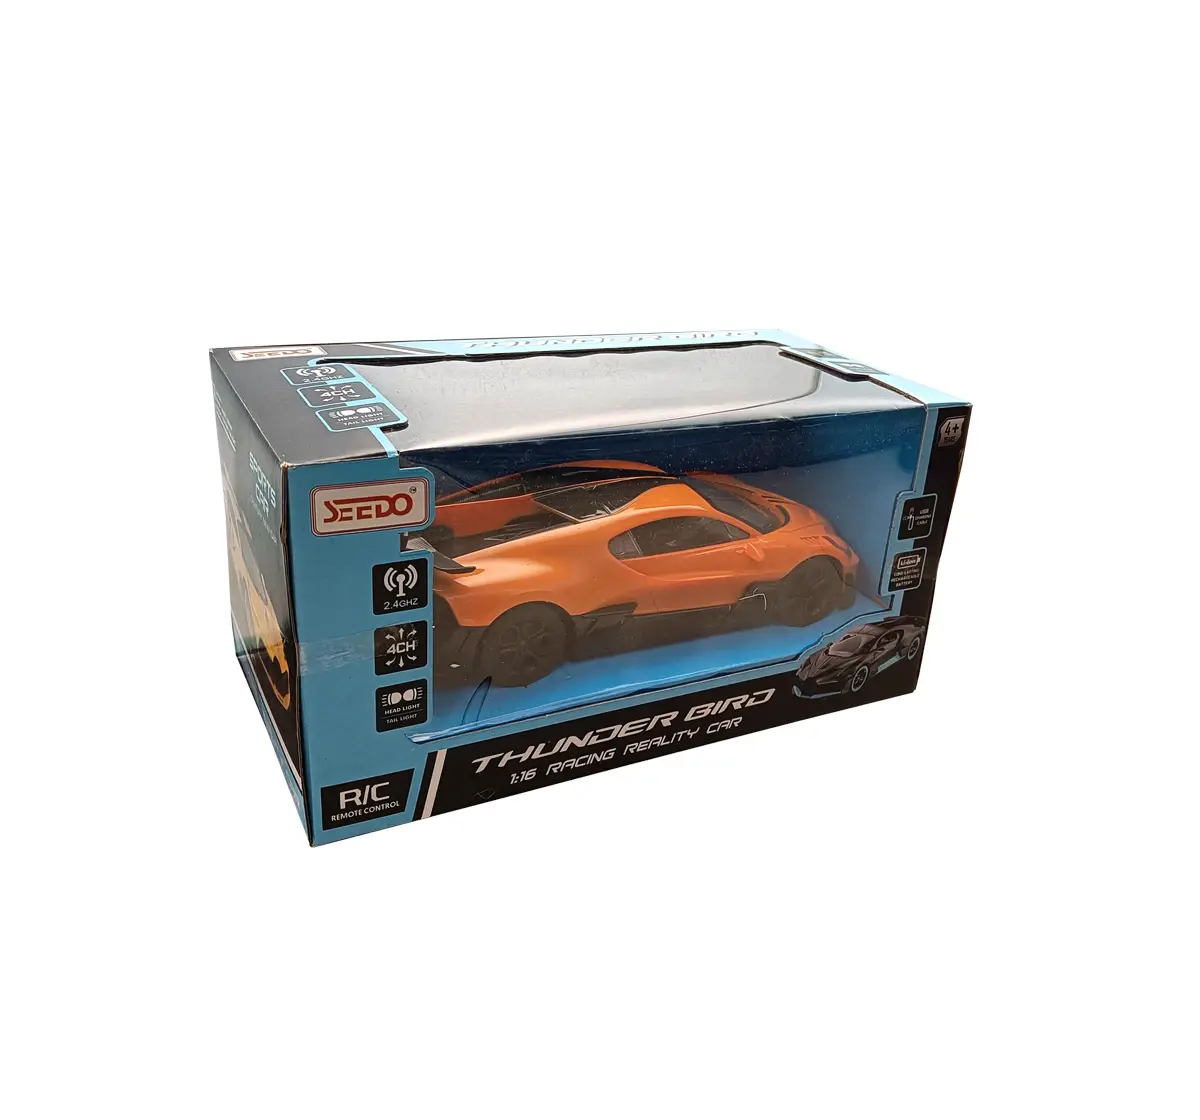 Seedo Electric Remote Controlled Thunder Bird Racing Car For Kids of Age 4Y+, Orange, Orange